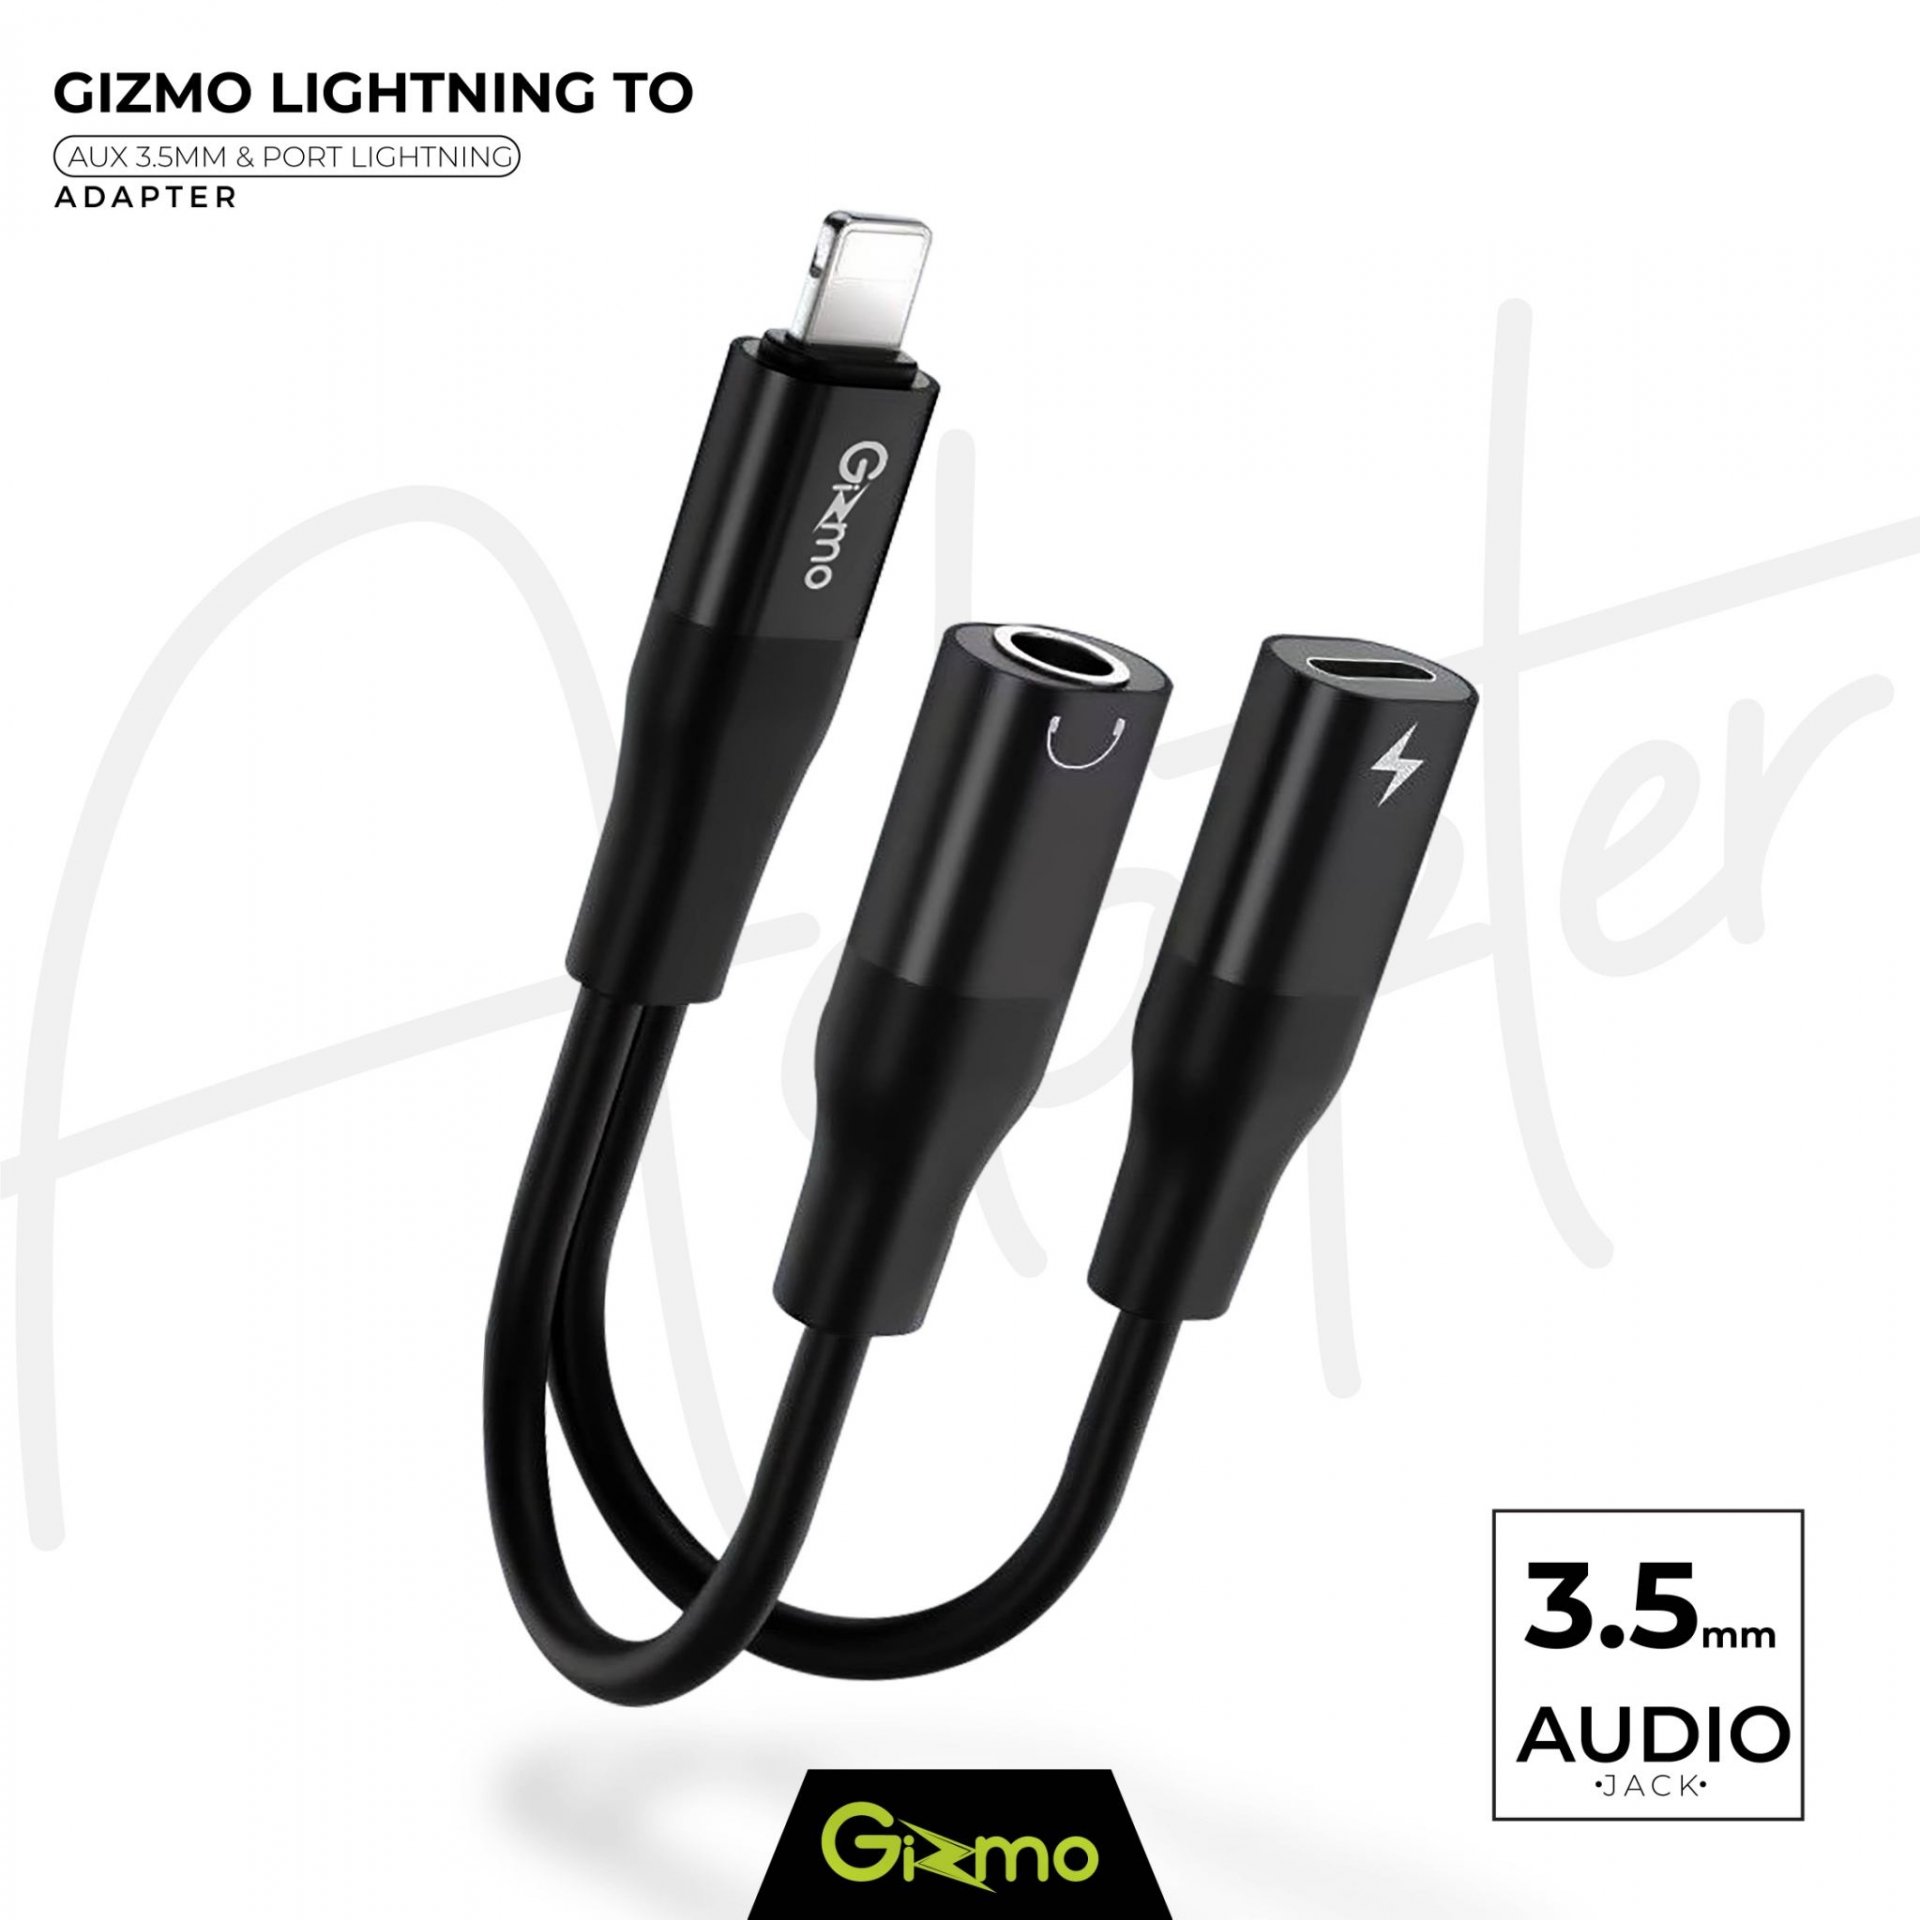 Gizmo หางหนู สายแปลง เชื่อมต่อ Lightning to Aux 3.5 และ Port lightning สำหรับหูฟัง ชาร์จไอโฟน GA-013